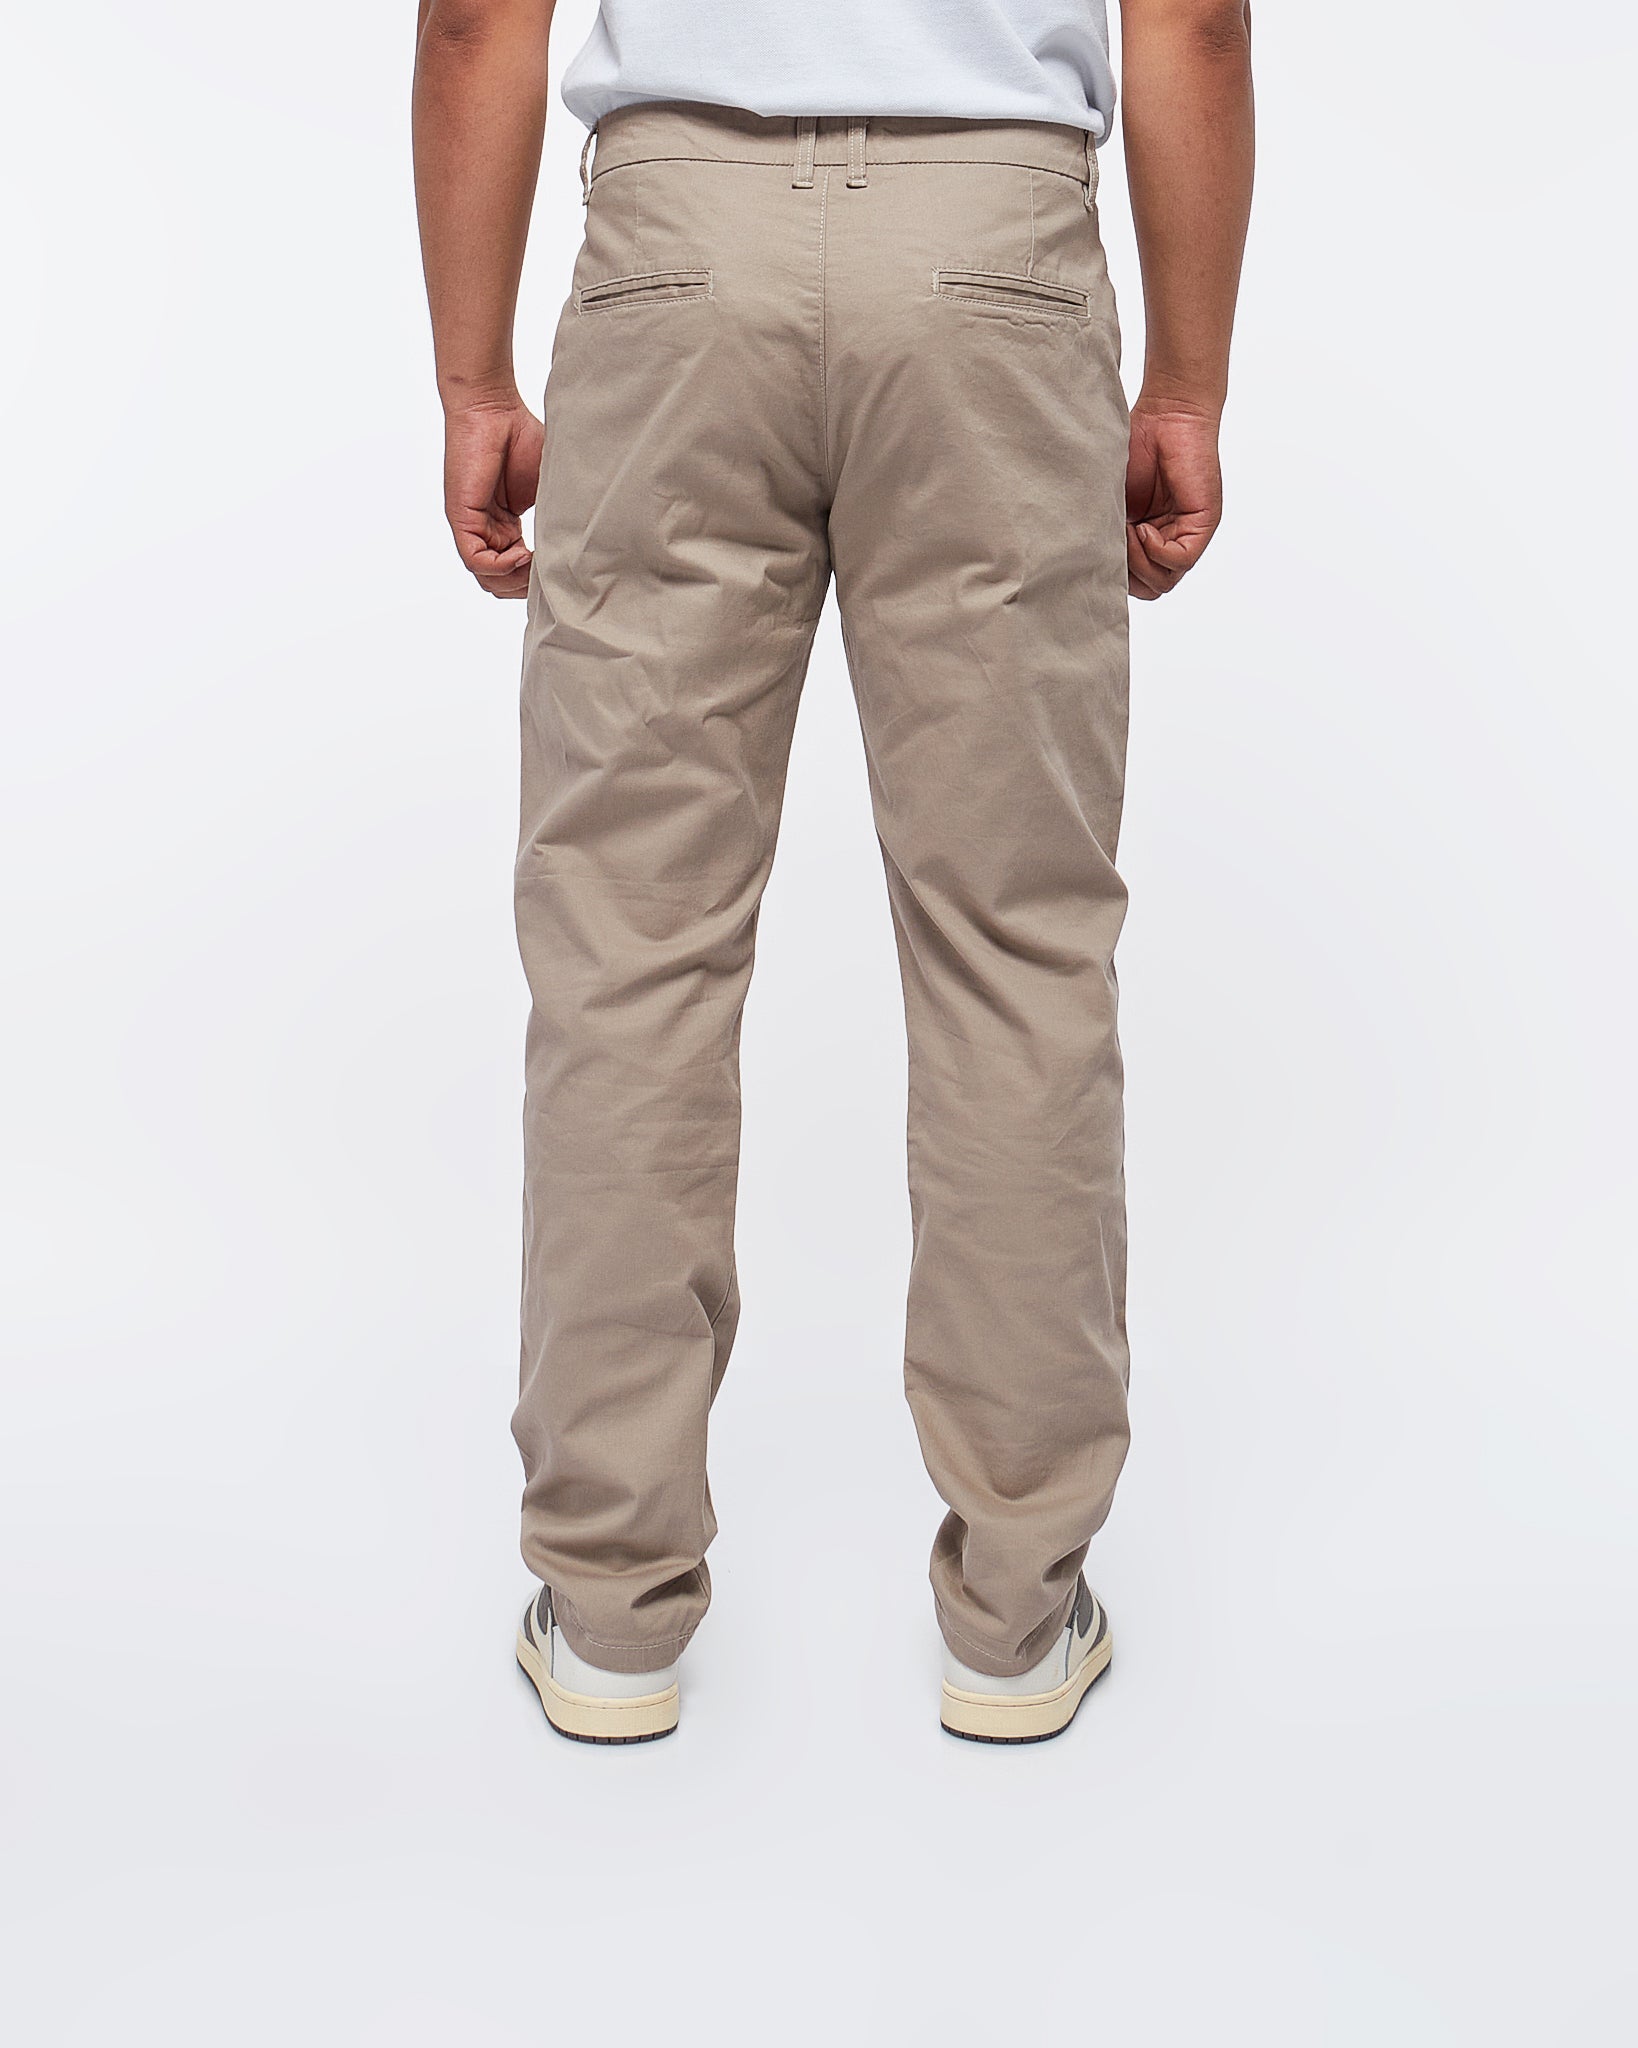 MOI OUTFIT-Stretchy Men Khaki Pants 24.90